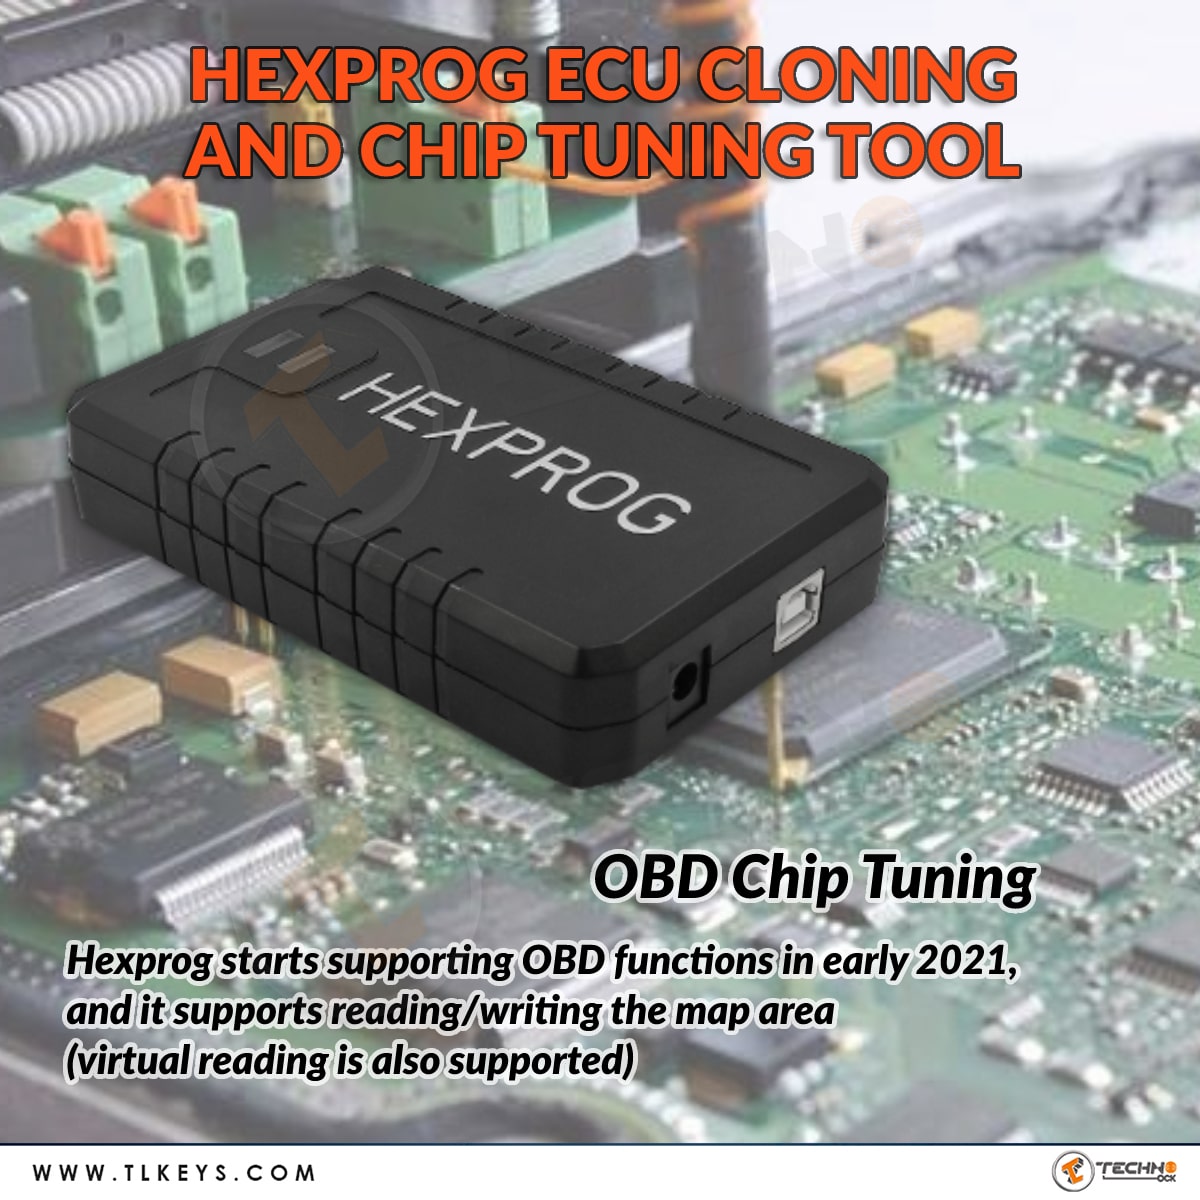 OBD Chip tuning